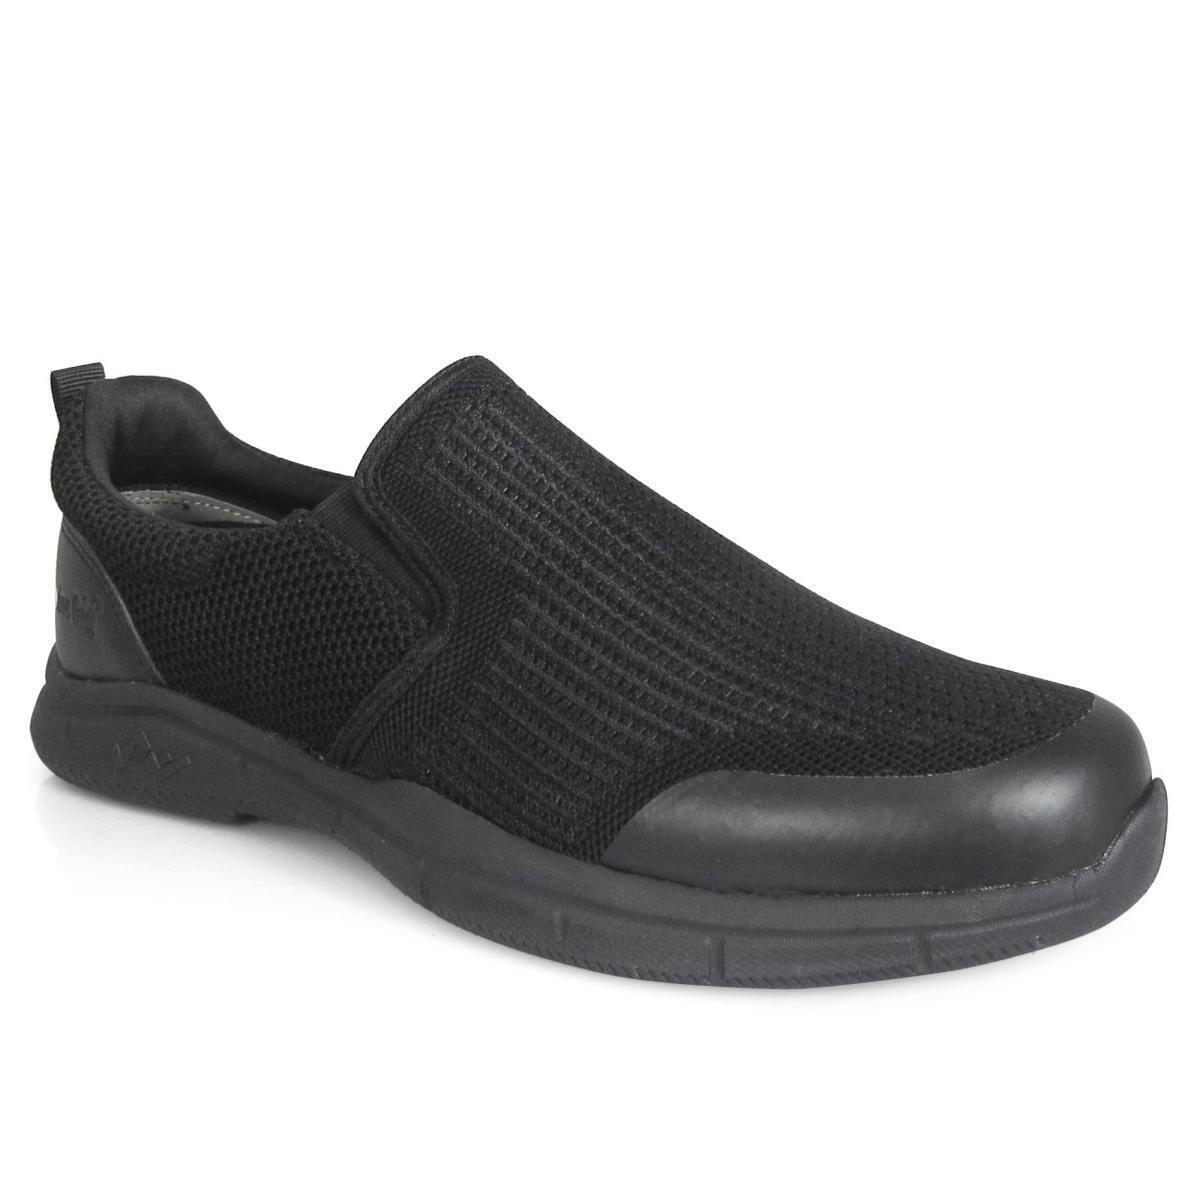 Genuine Grip 1700-14M Men Slip-On Water Repellent Shoe, Black - Size 14 Medium